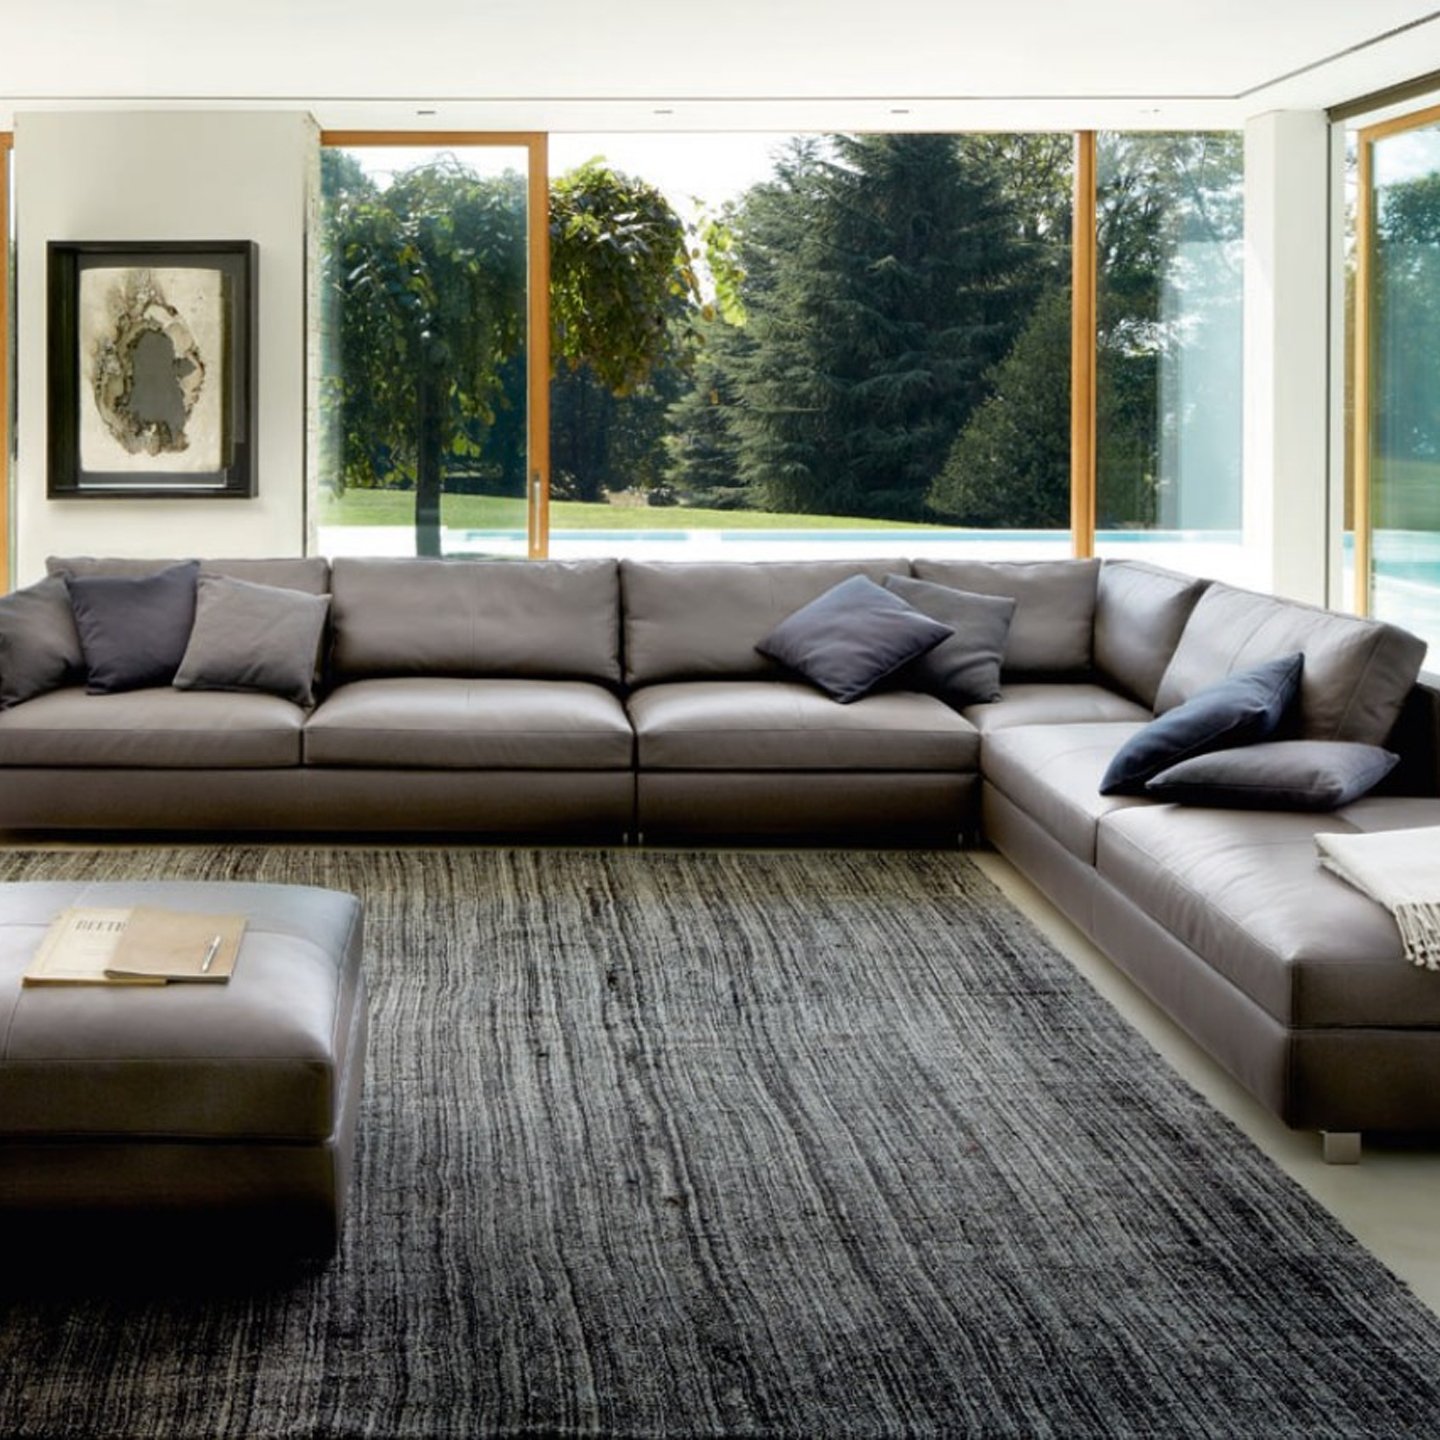 tidligere Susteen tæerne See Haworth Collection's Massimosistema Modern Leather Sofa | Haworth